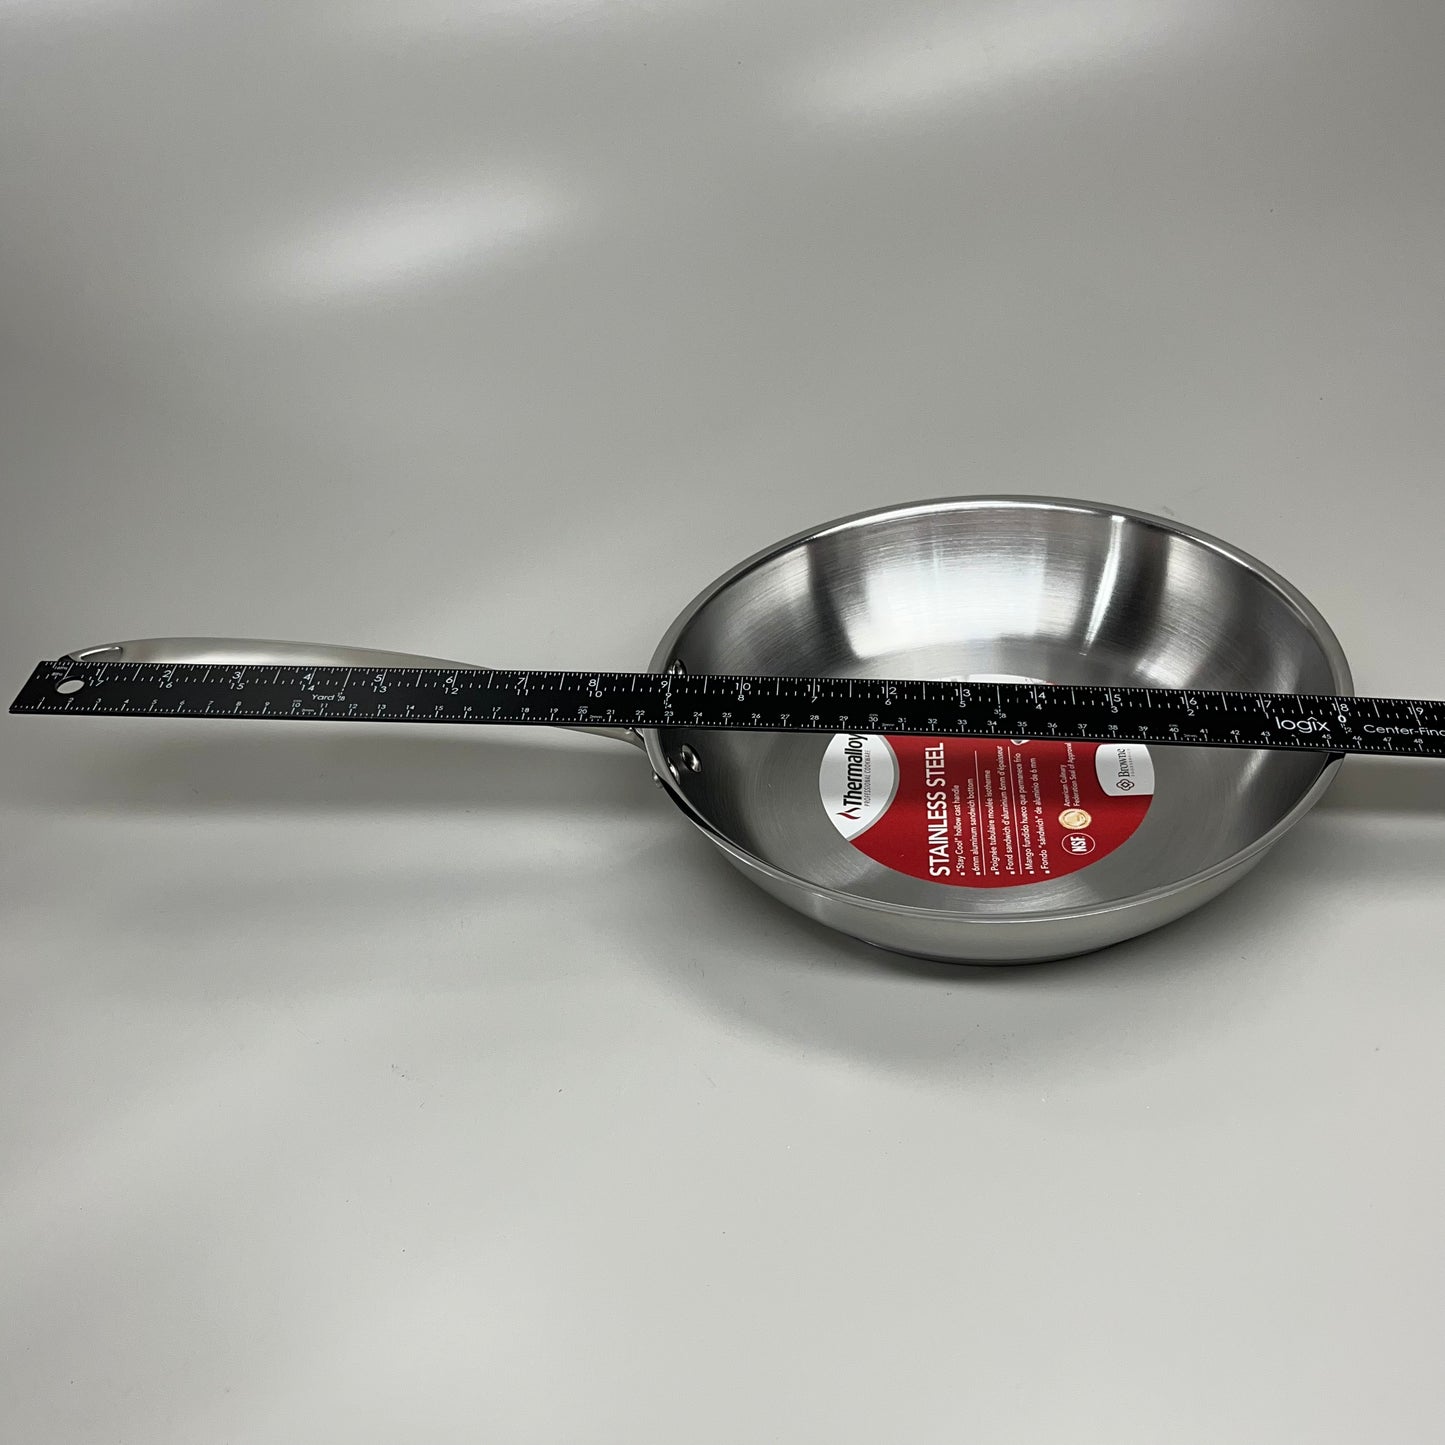 BROWNE Thermalloy Deluxe Fry Pan 9.5"x 2" w/ ergonomic handle 5724050 (New)